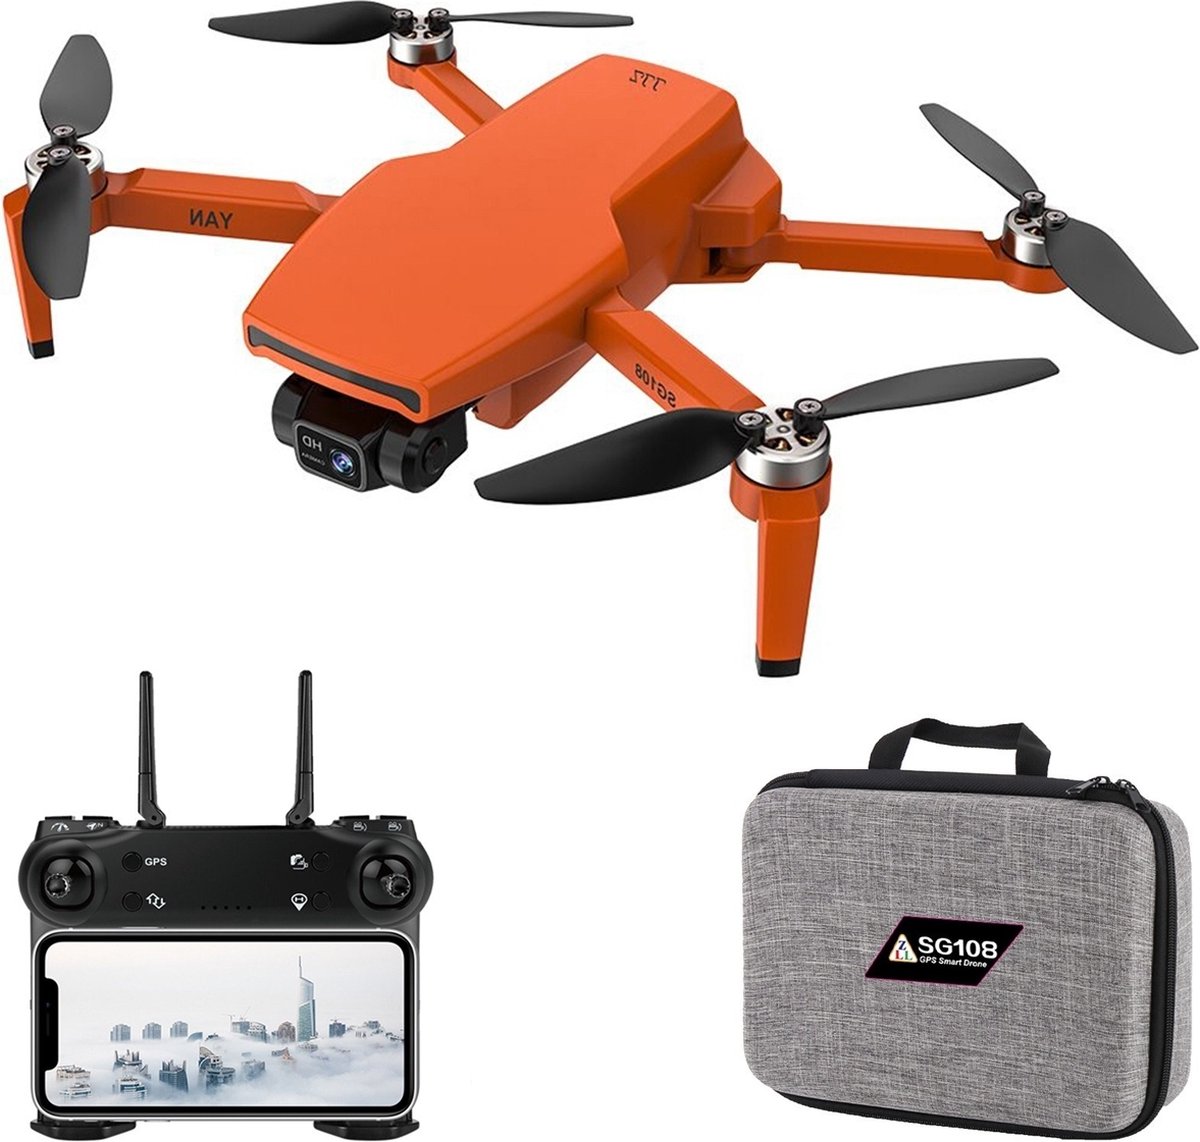 SG108 Drone 4k HD 5G WiFi Drone Met HD Camera - Brushless - Inclusief Opbergtas